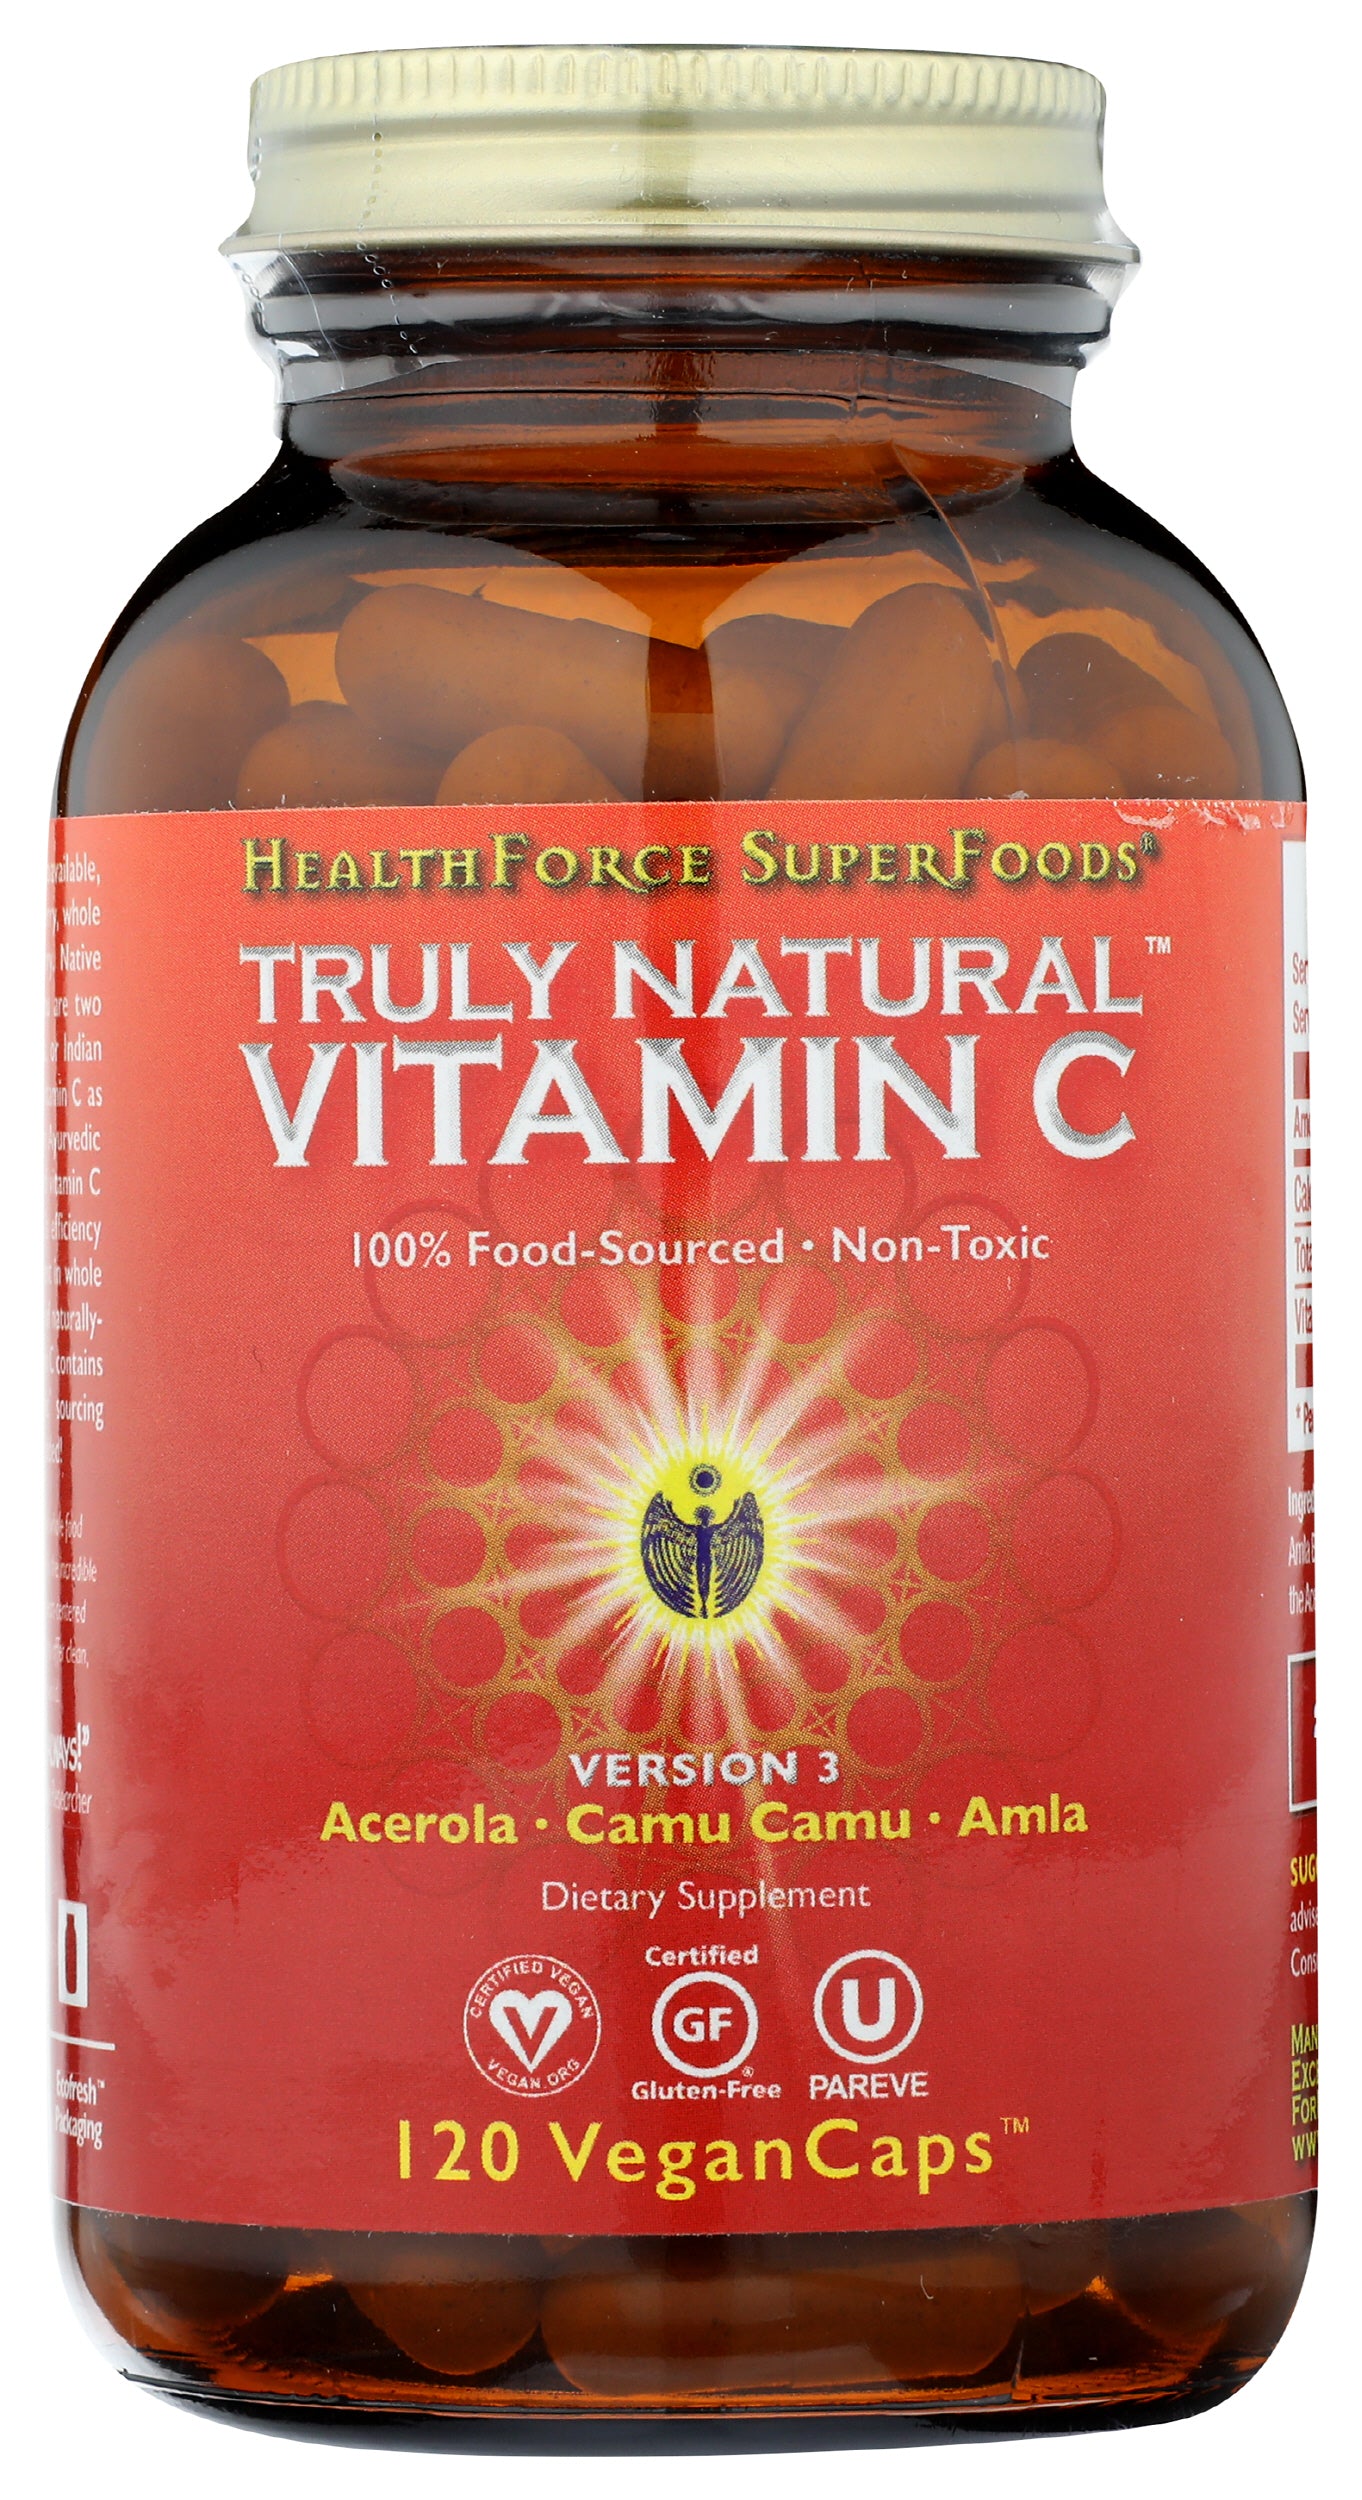 HealthForce SuperFoods Vitamin C 120 Vegan Capsules Front of Bottle